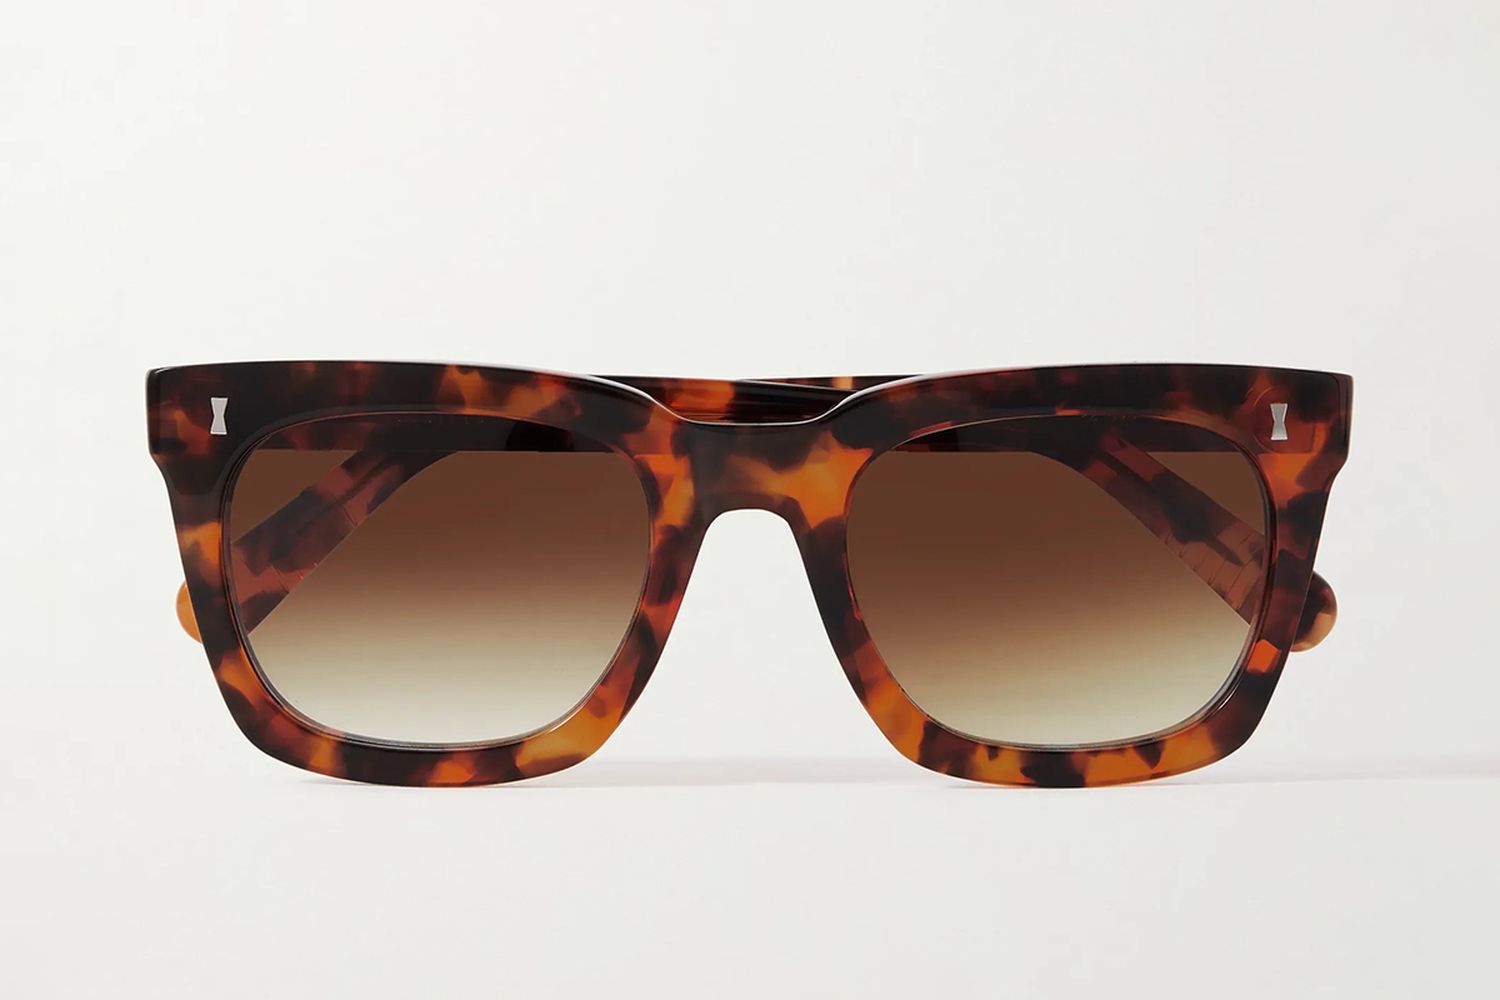 Judd Square-Frame Tortoiseshell Acetate Sunglasses